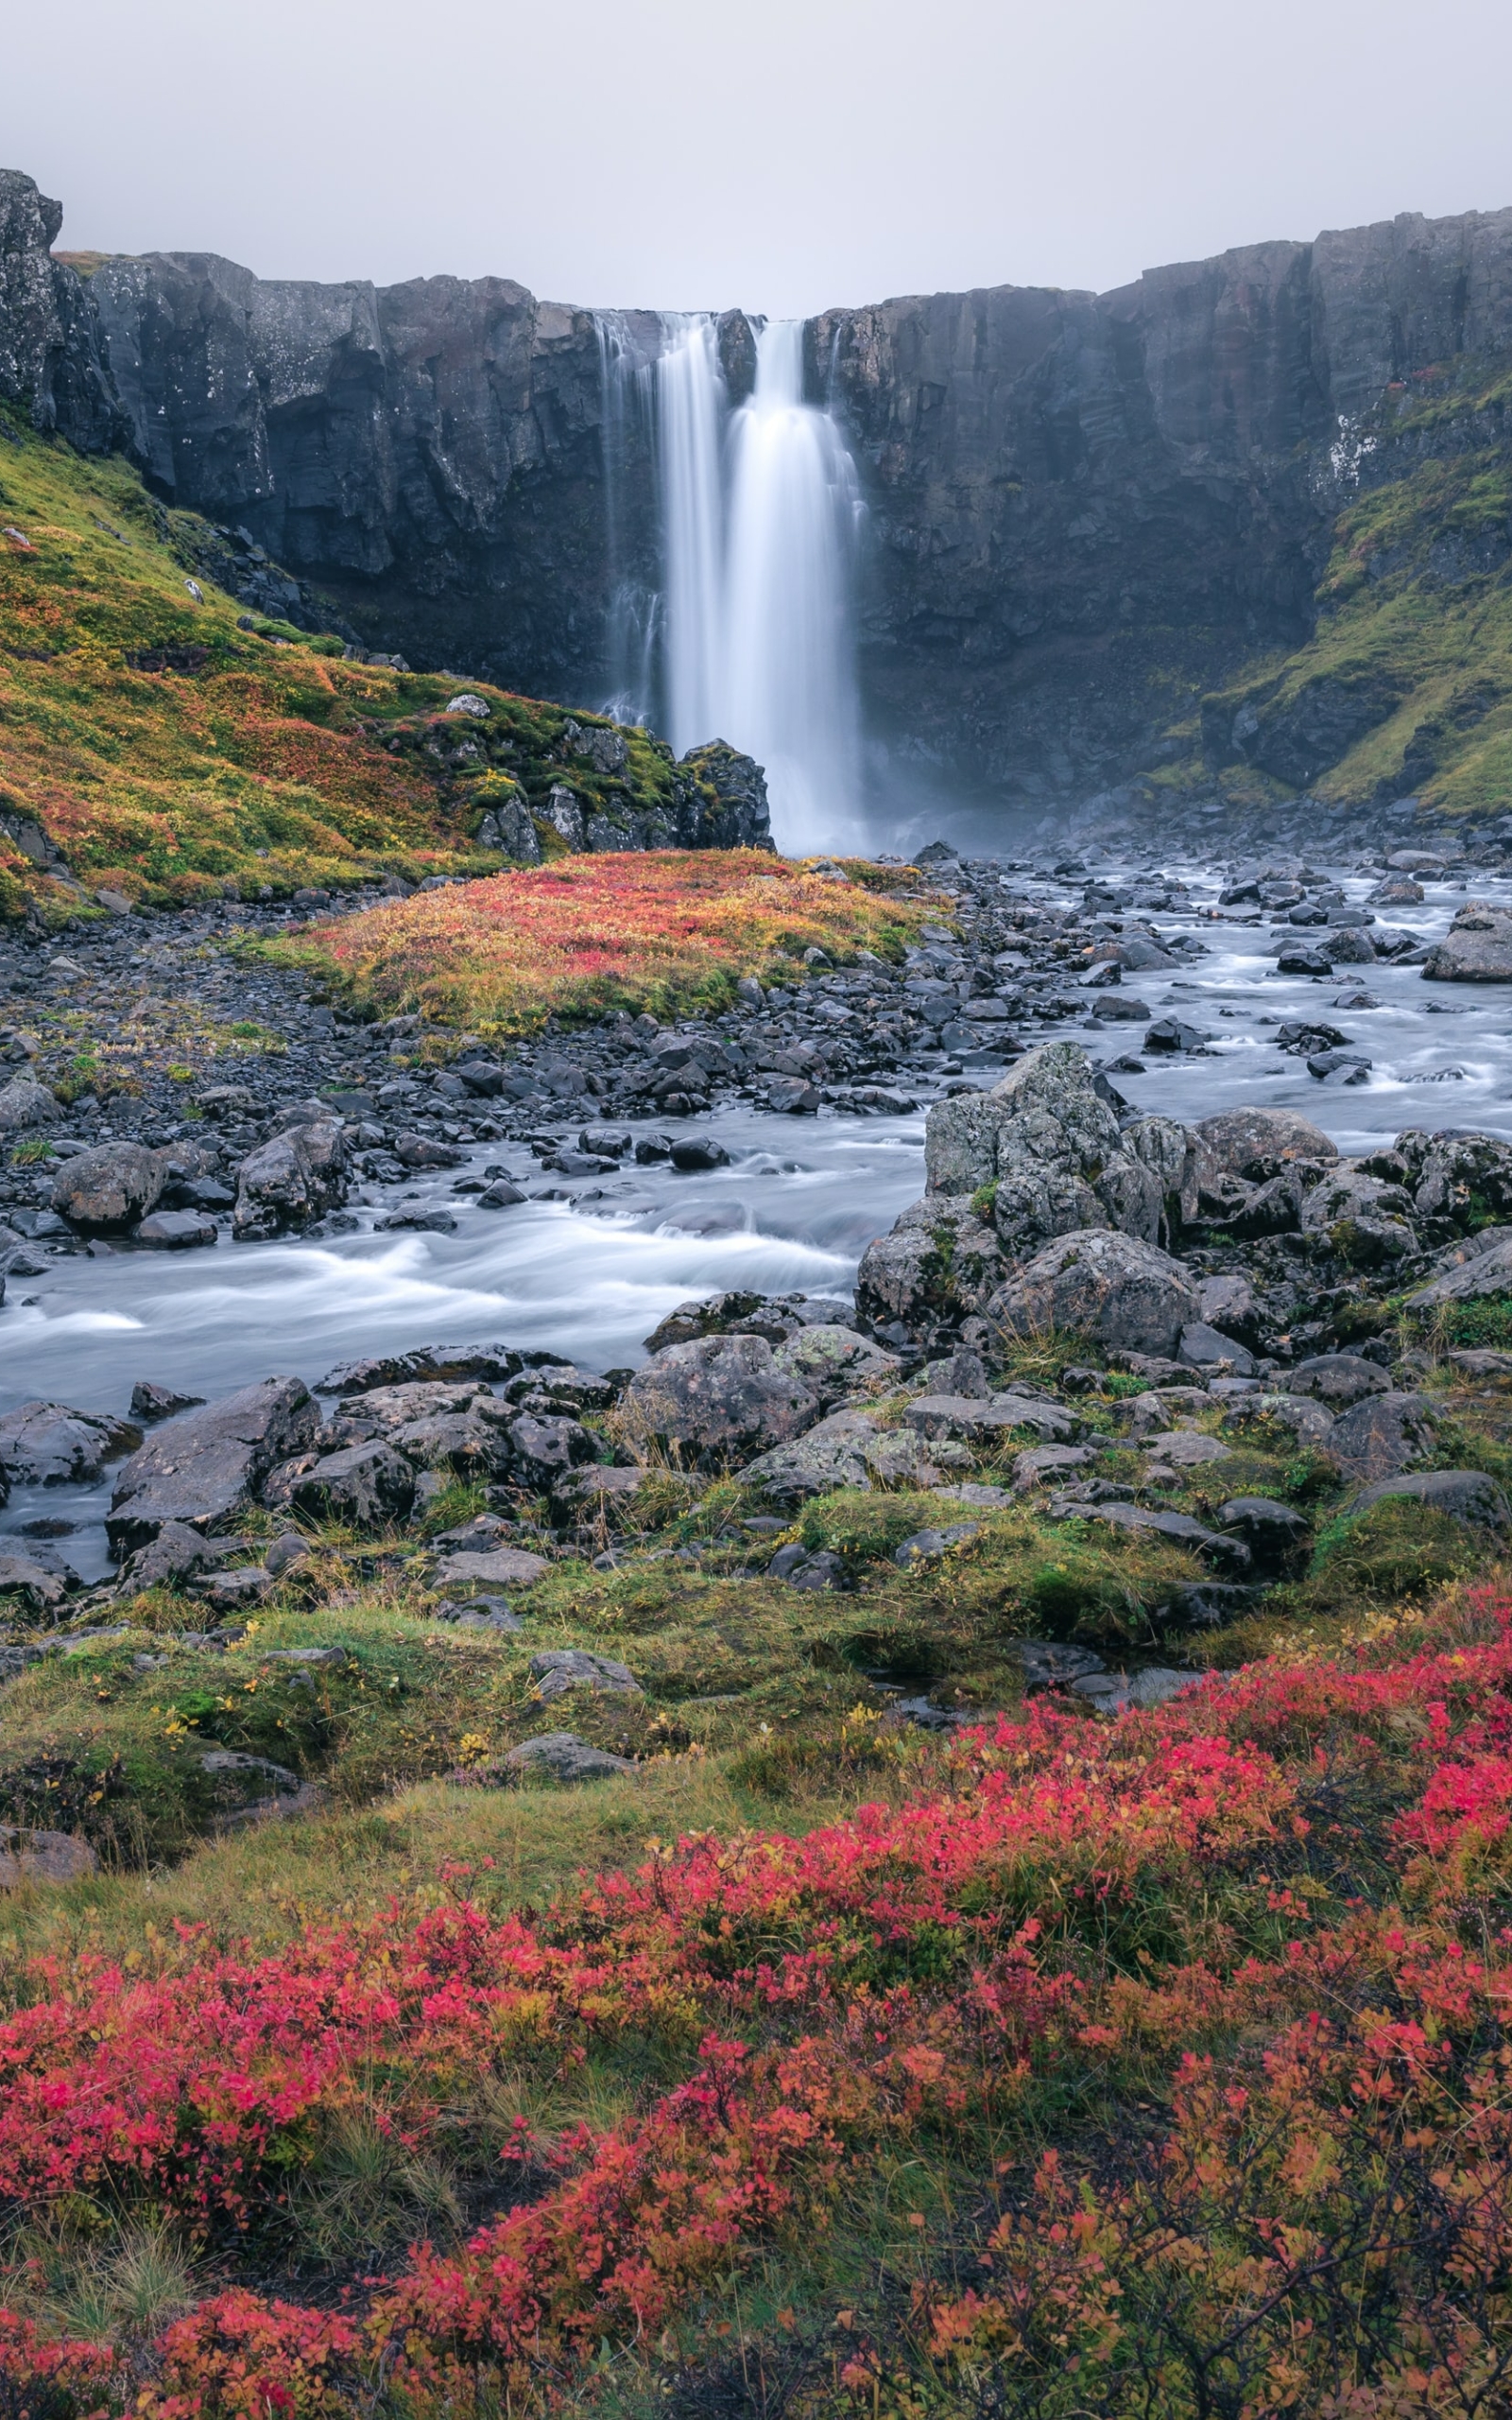 Descarga gratis la imagen Cascadas, Cascada, Islandia, Seljalandsfoss, Tierra/naturaleza en el escritorio de tu PC